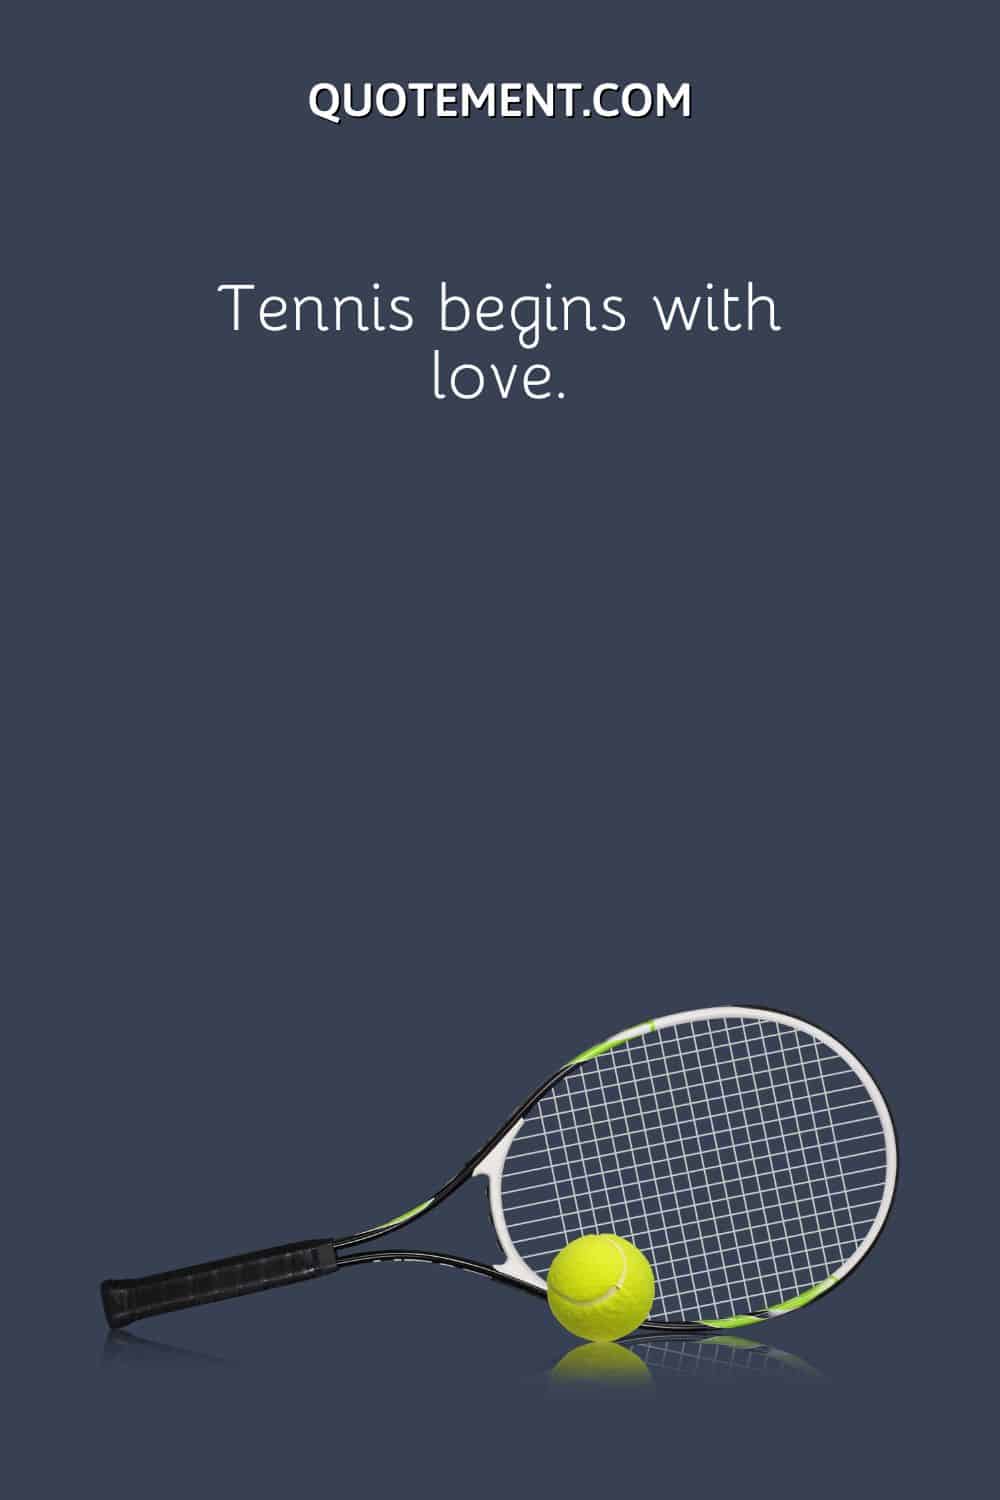 Tennis begins with love.